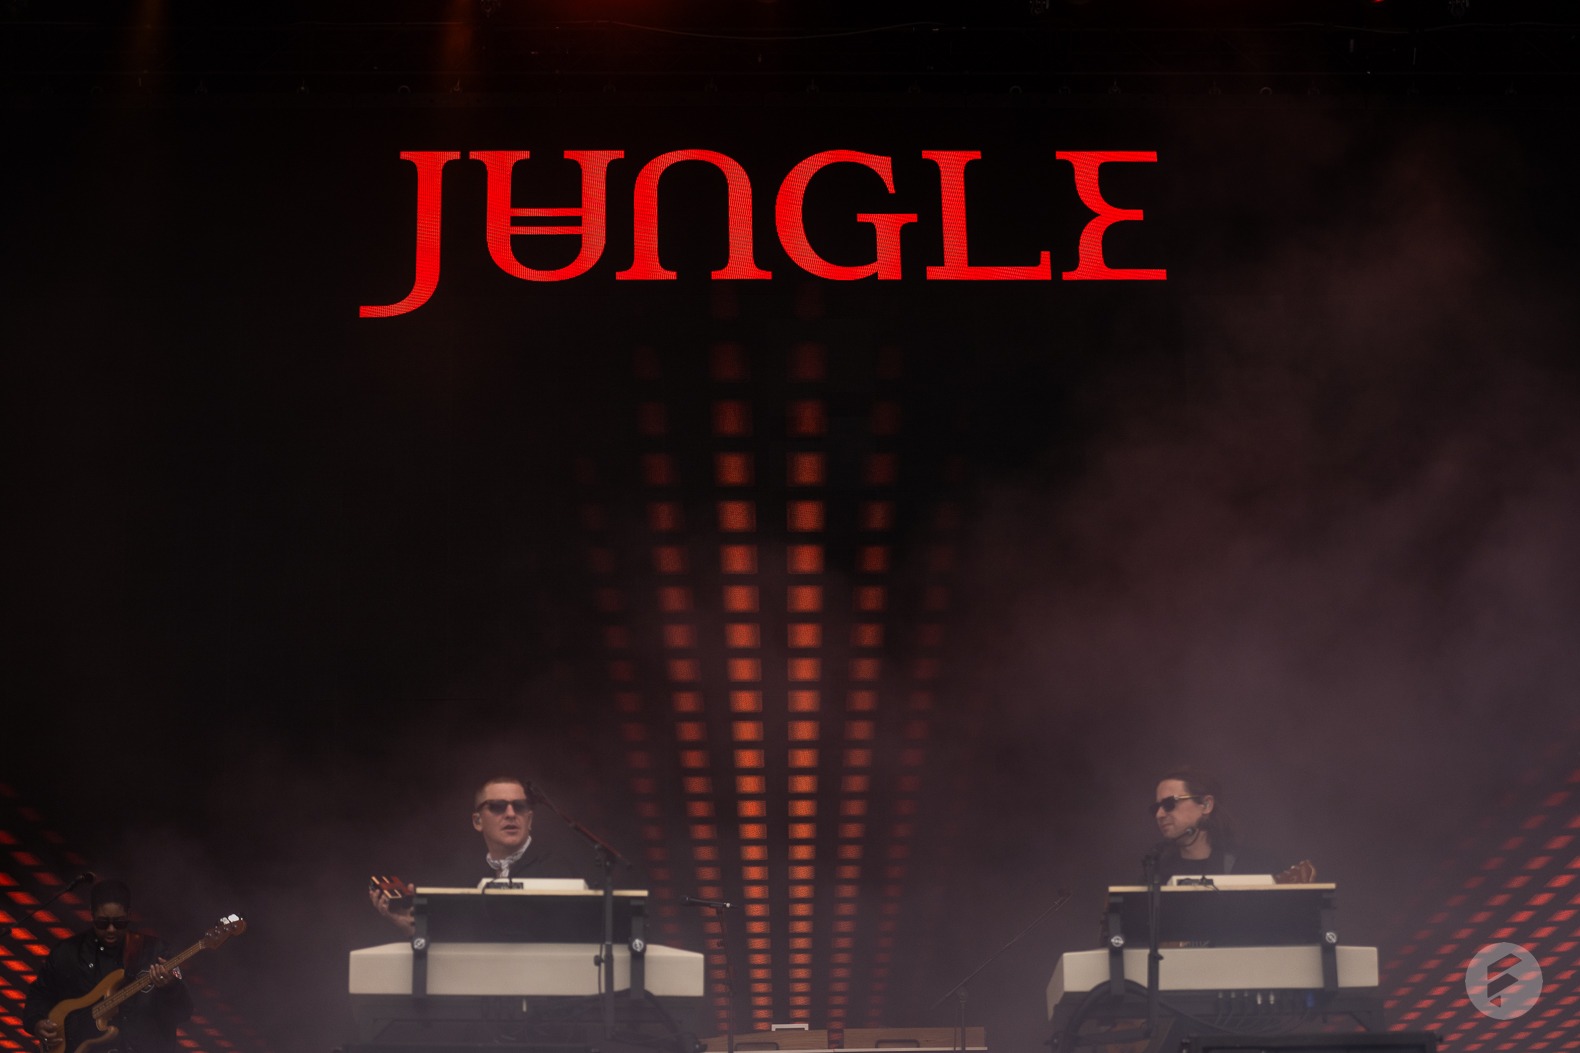 Jungle · Hurricane Festival 2024